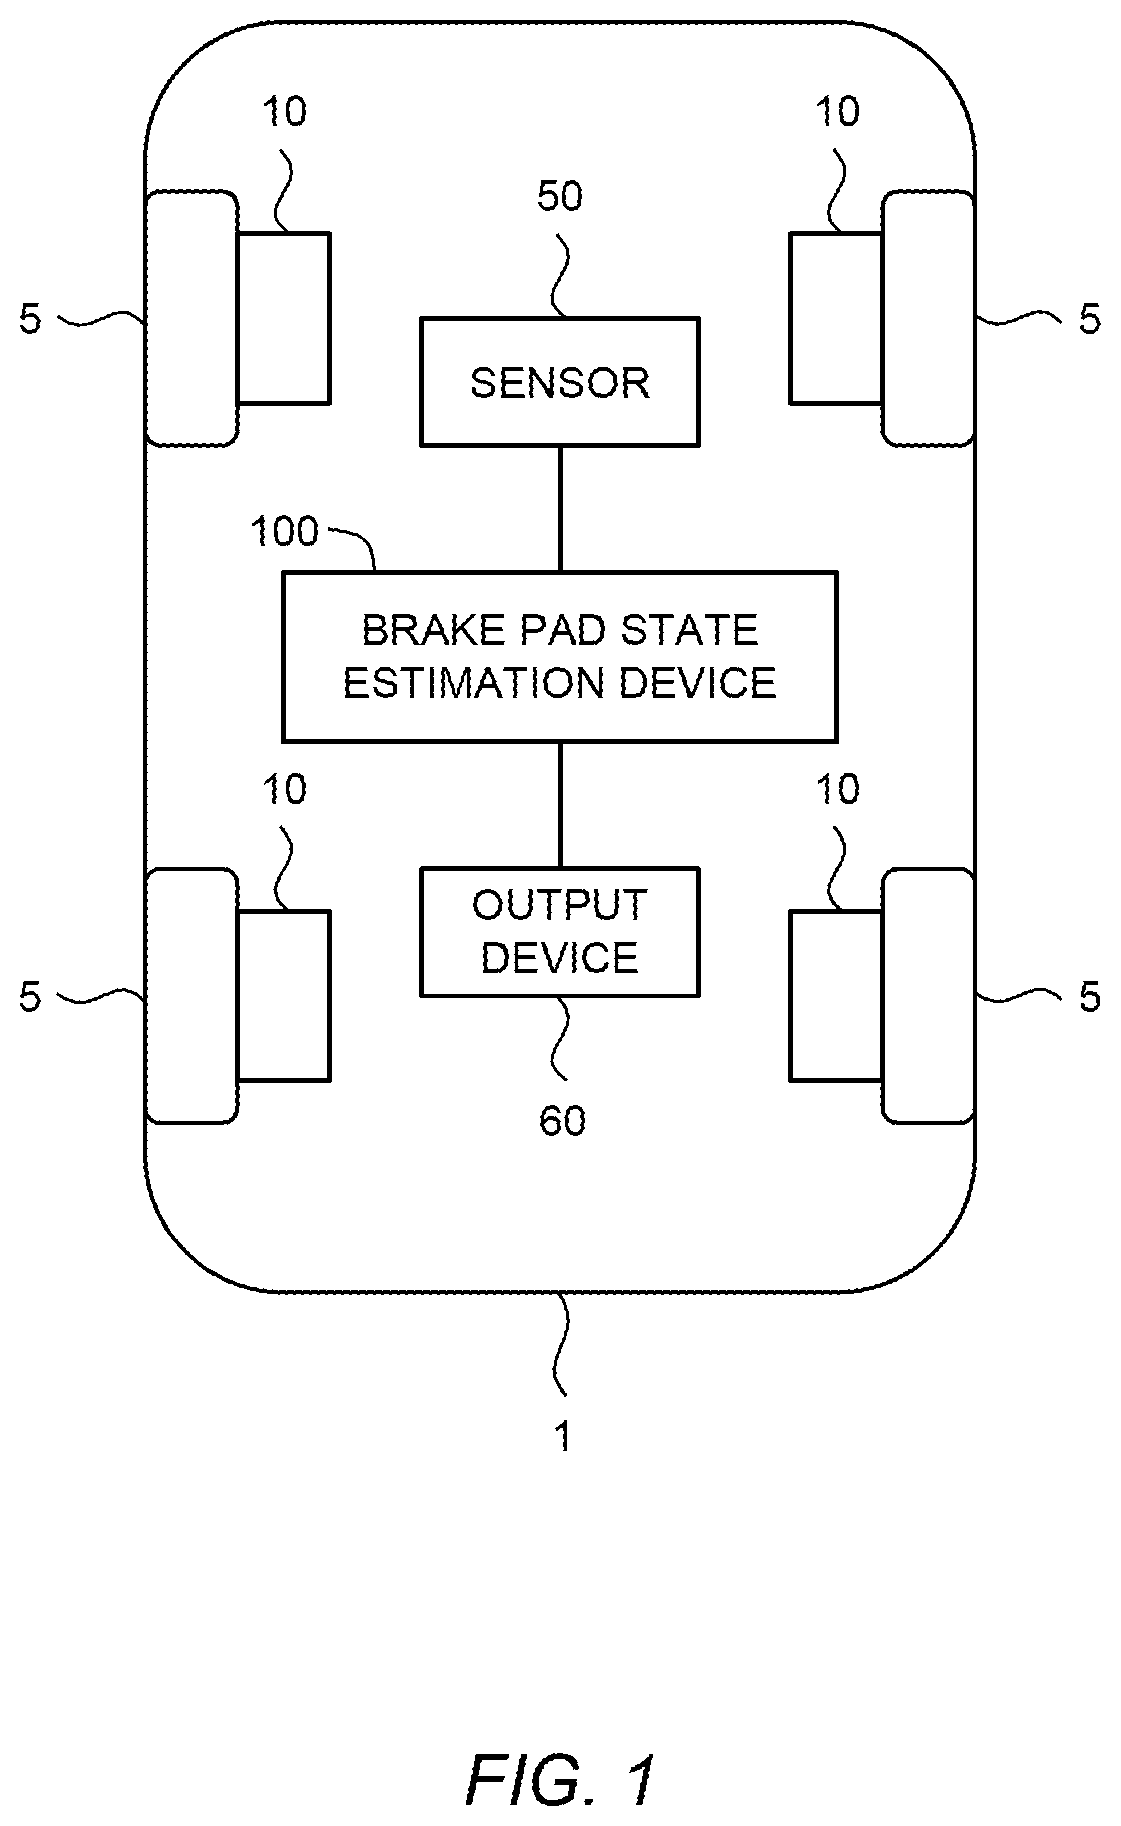 Brake pad state estimation device and brake pad state estimation method